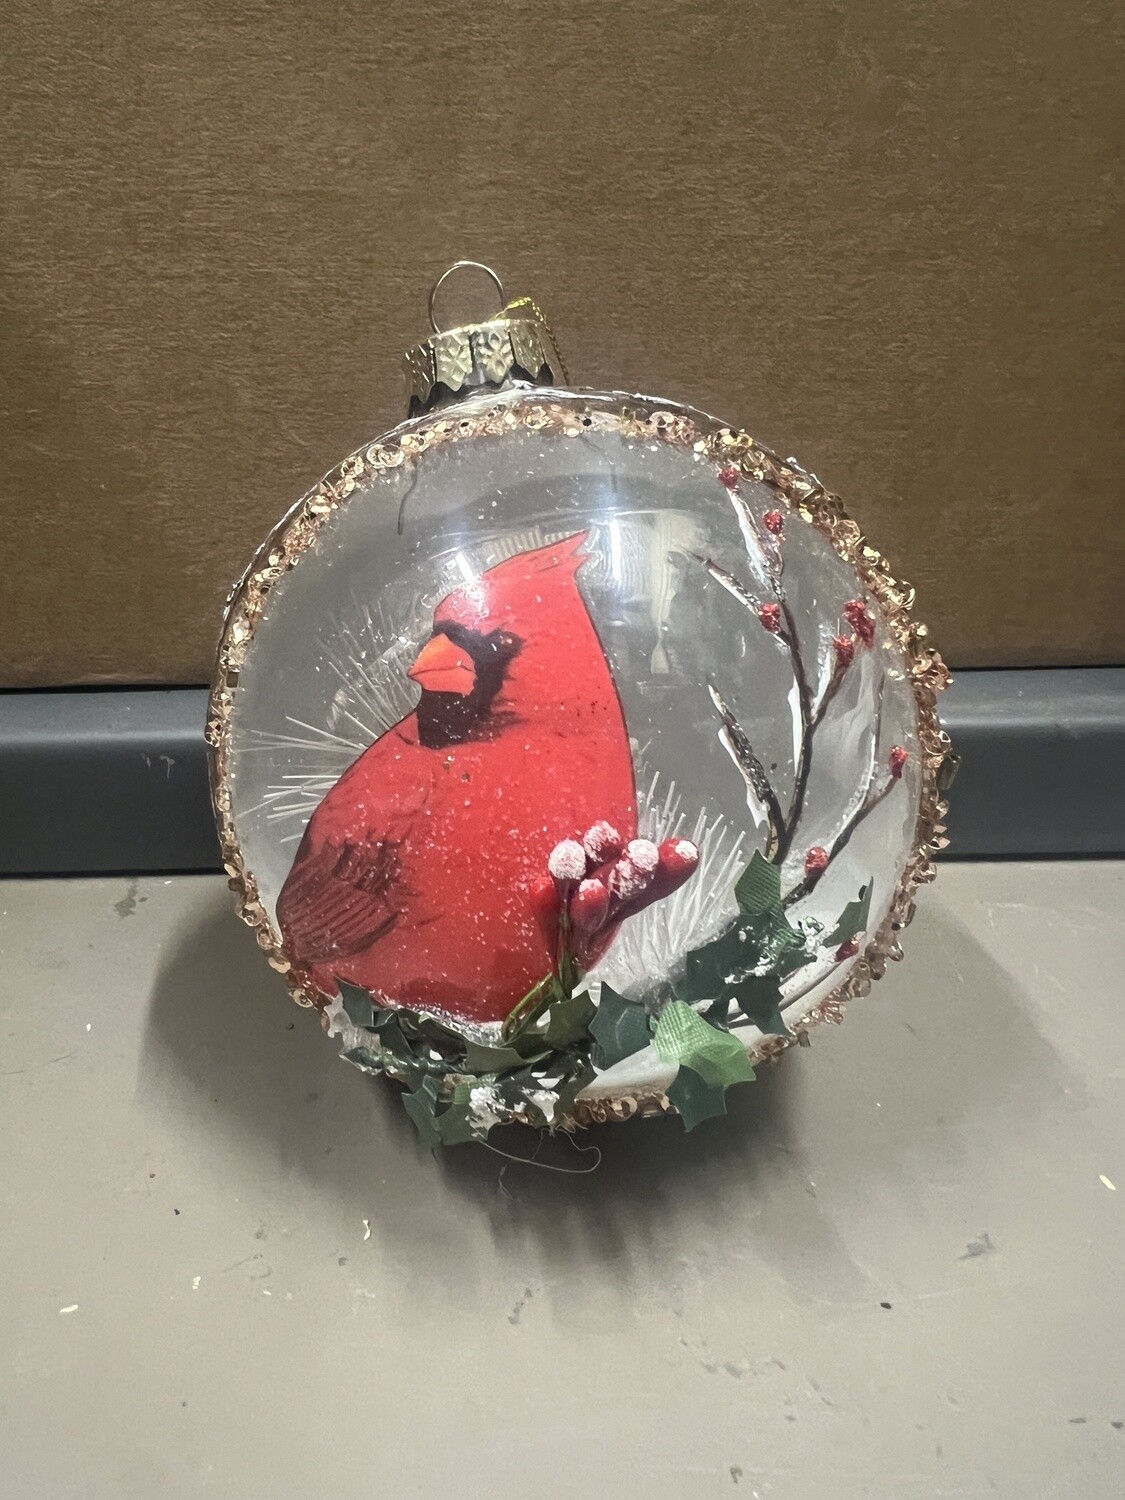 Cardinal Ball Ornament